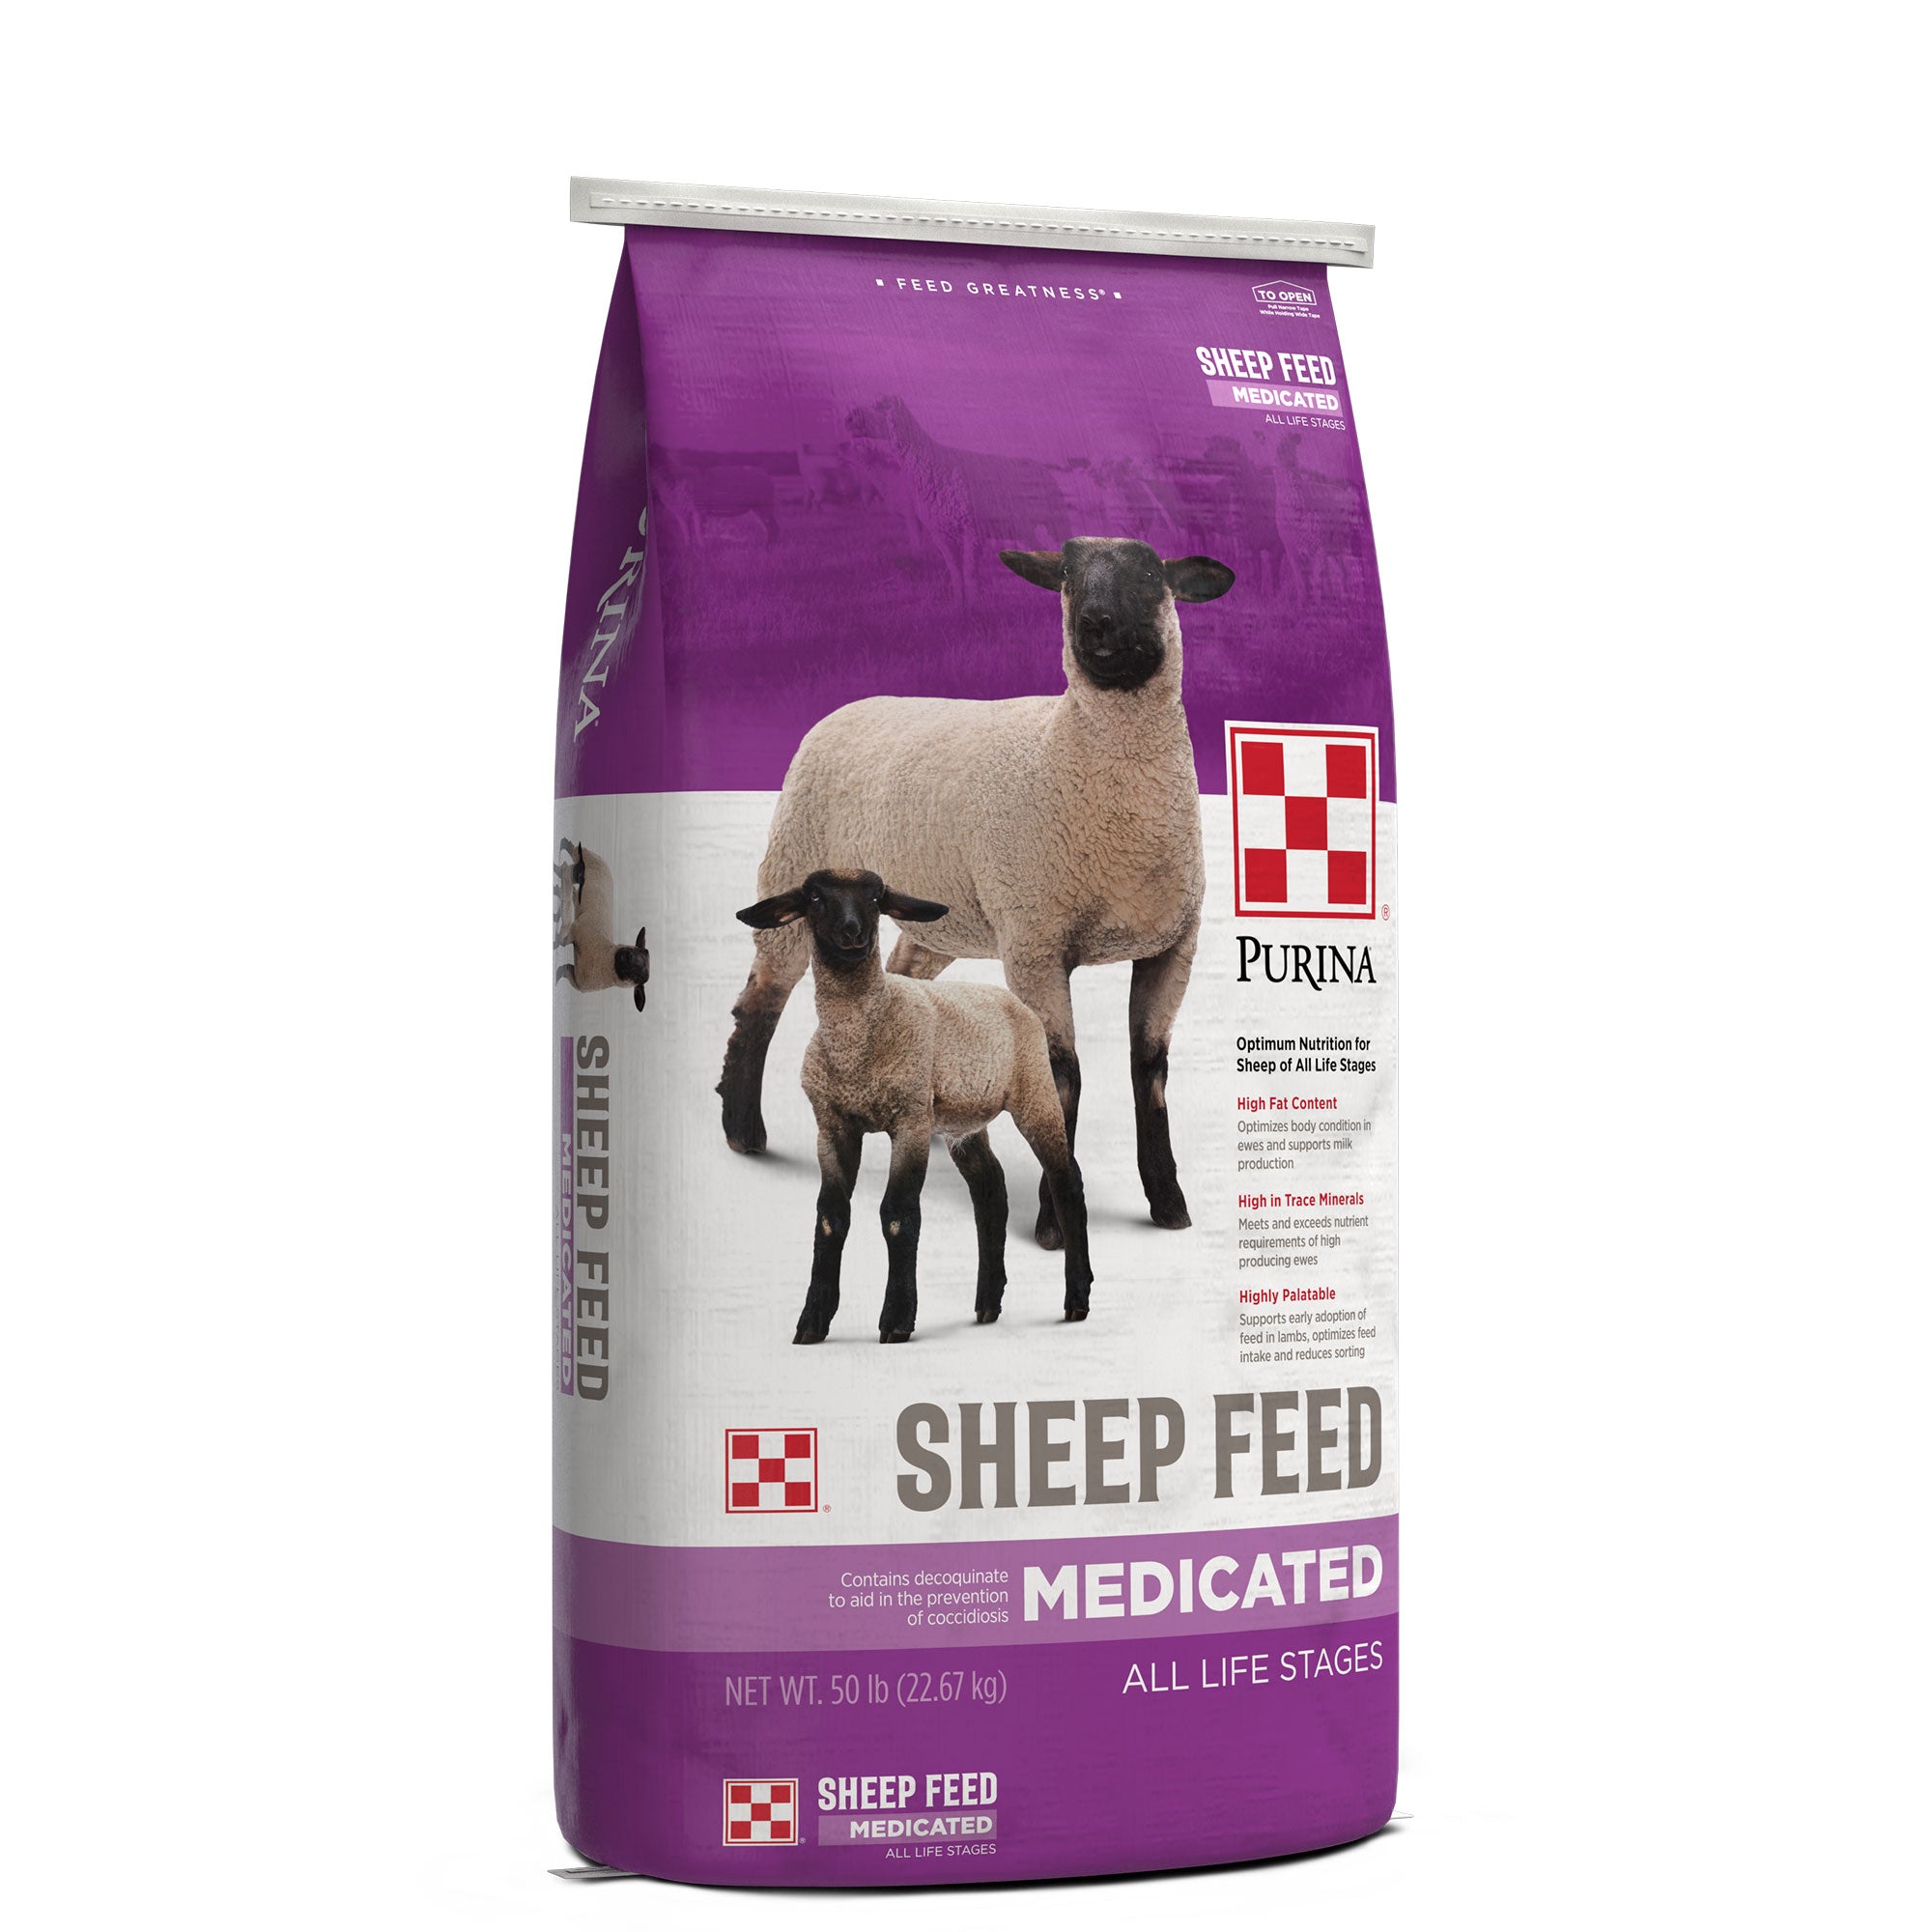 Purina® Lamb & Ewe 15 DX30 Sheep Feed